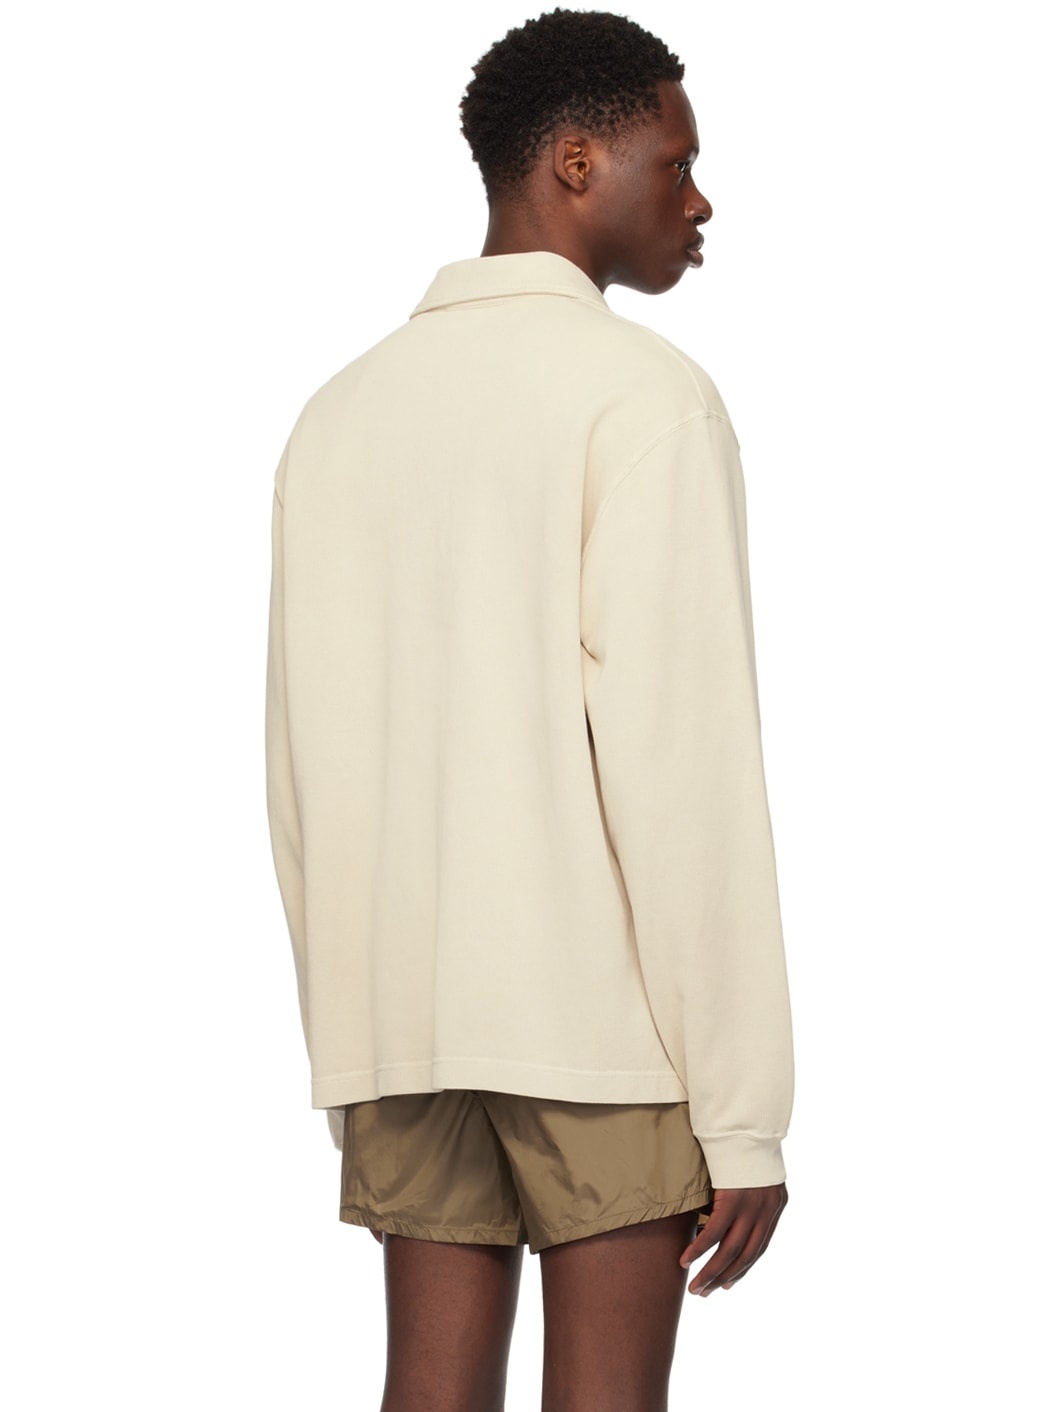 Off-White Lad Sweatshirt - 3